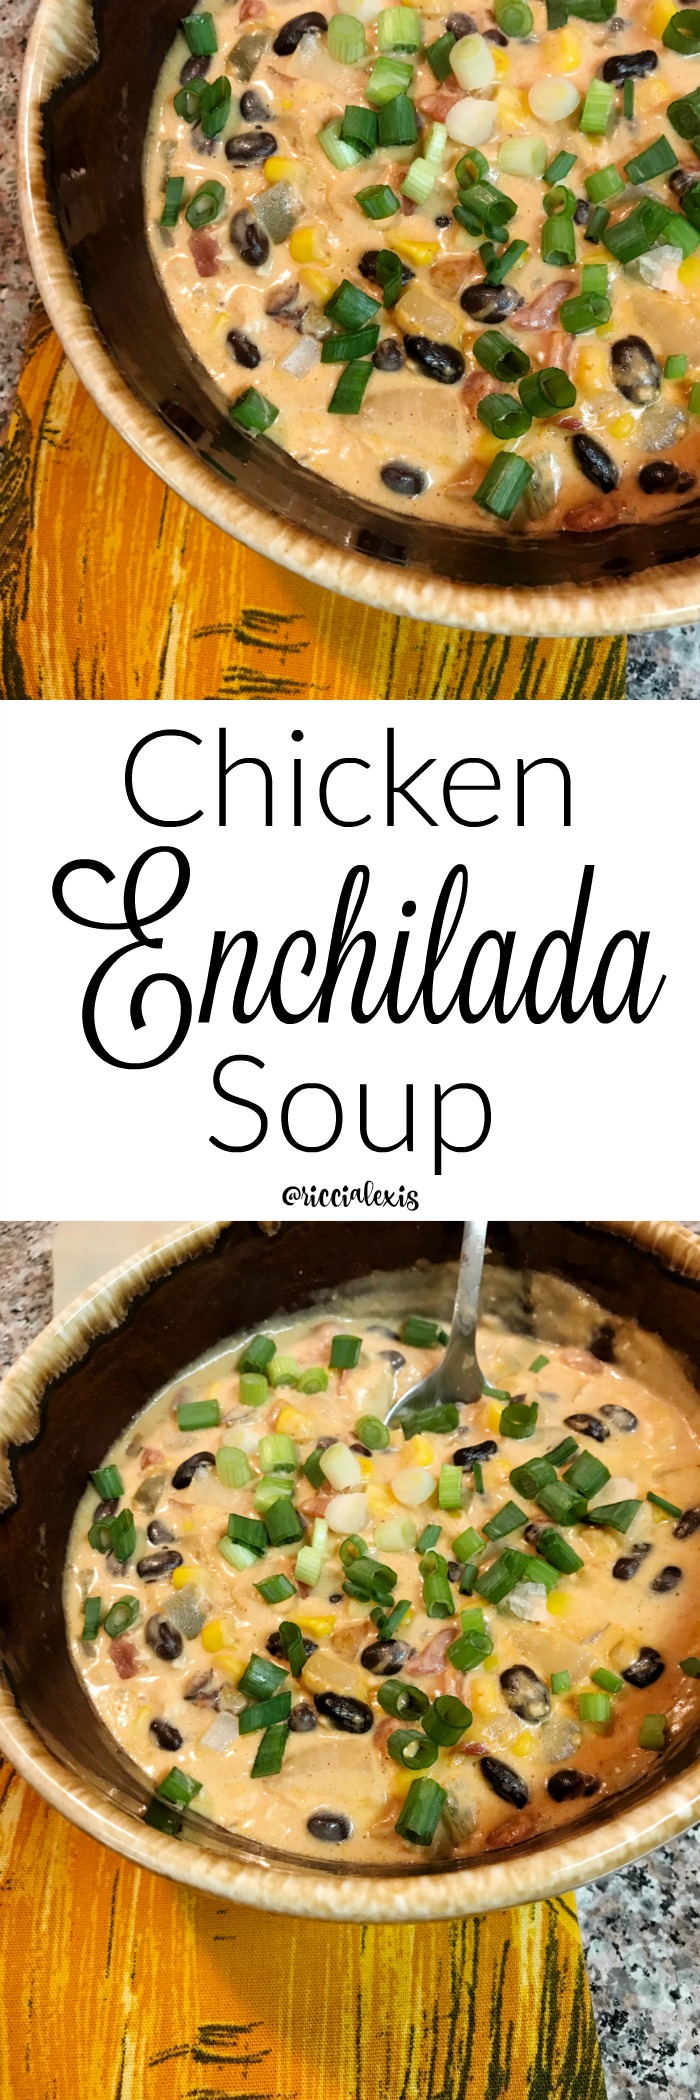 Chicken Enchilada Soup {recipe}